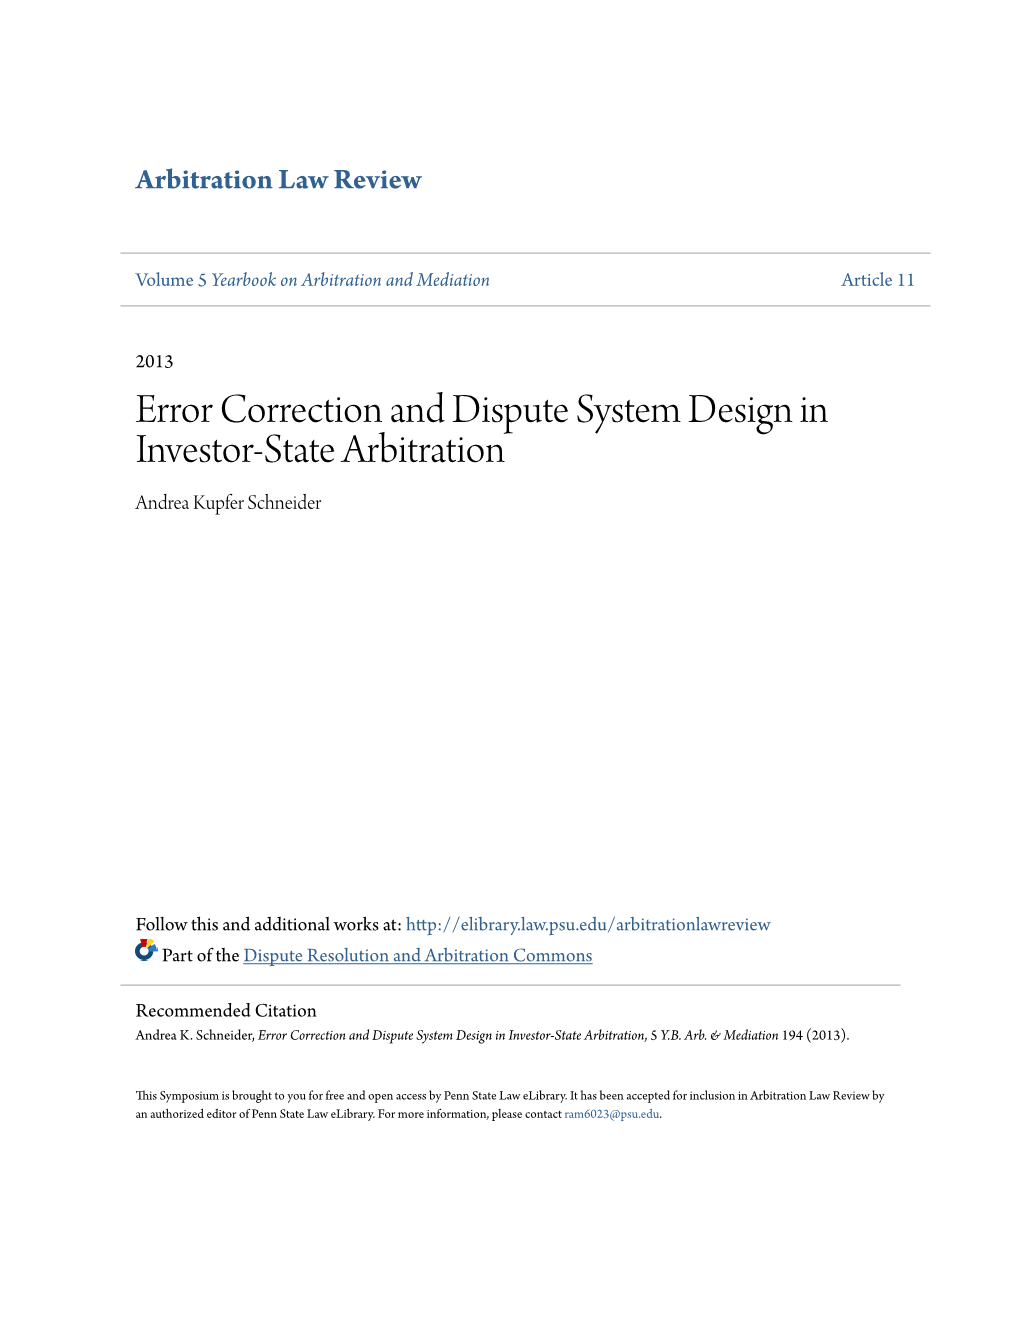 Error Correction and Dispute System Design in Investor-State Arbitration Andrea Kupfer Schneider